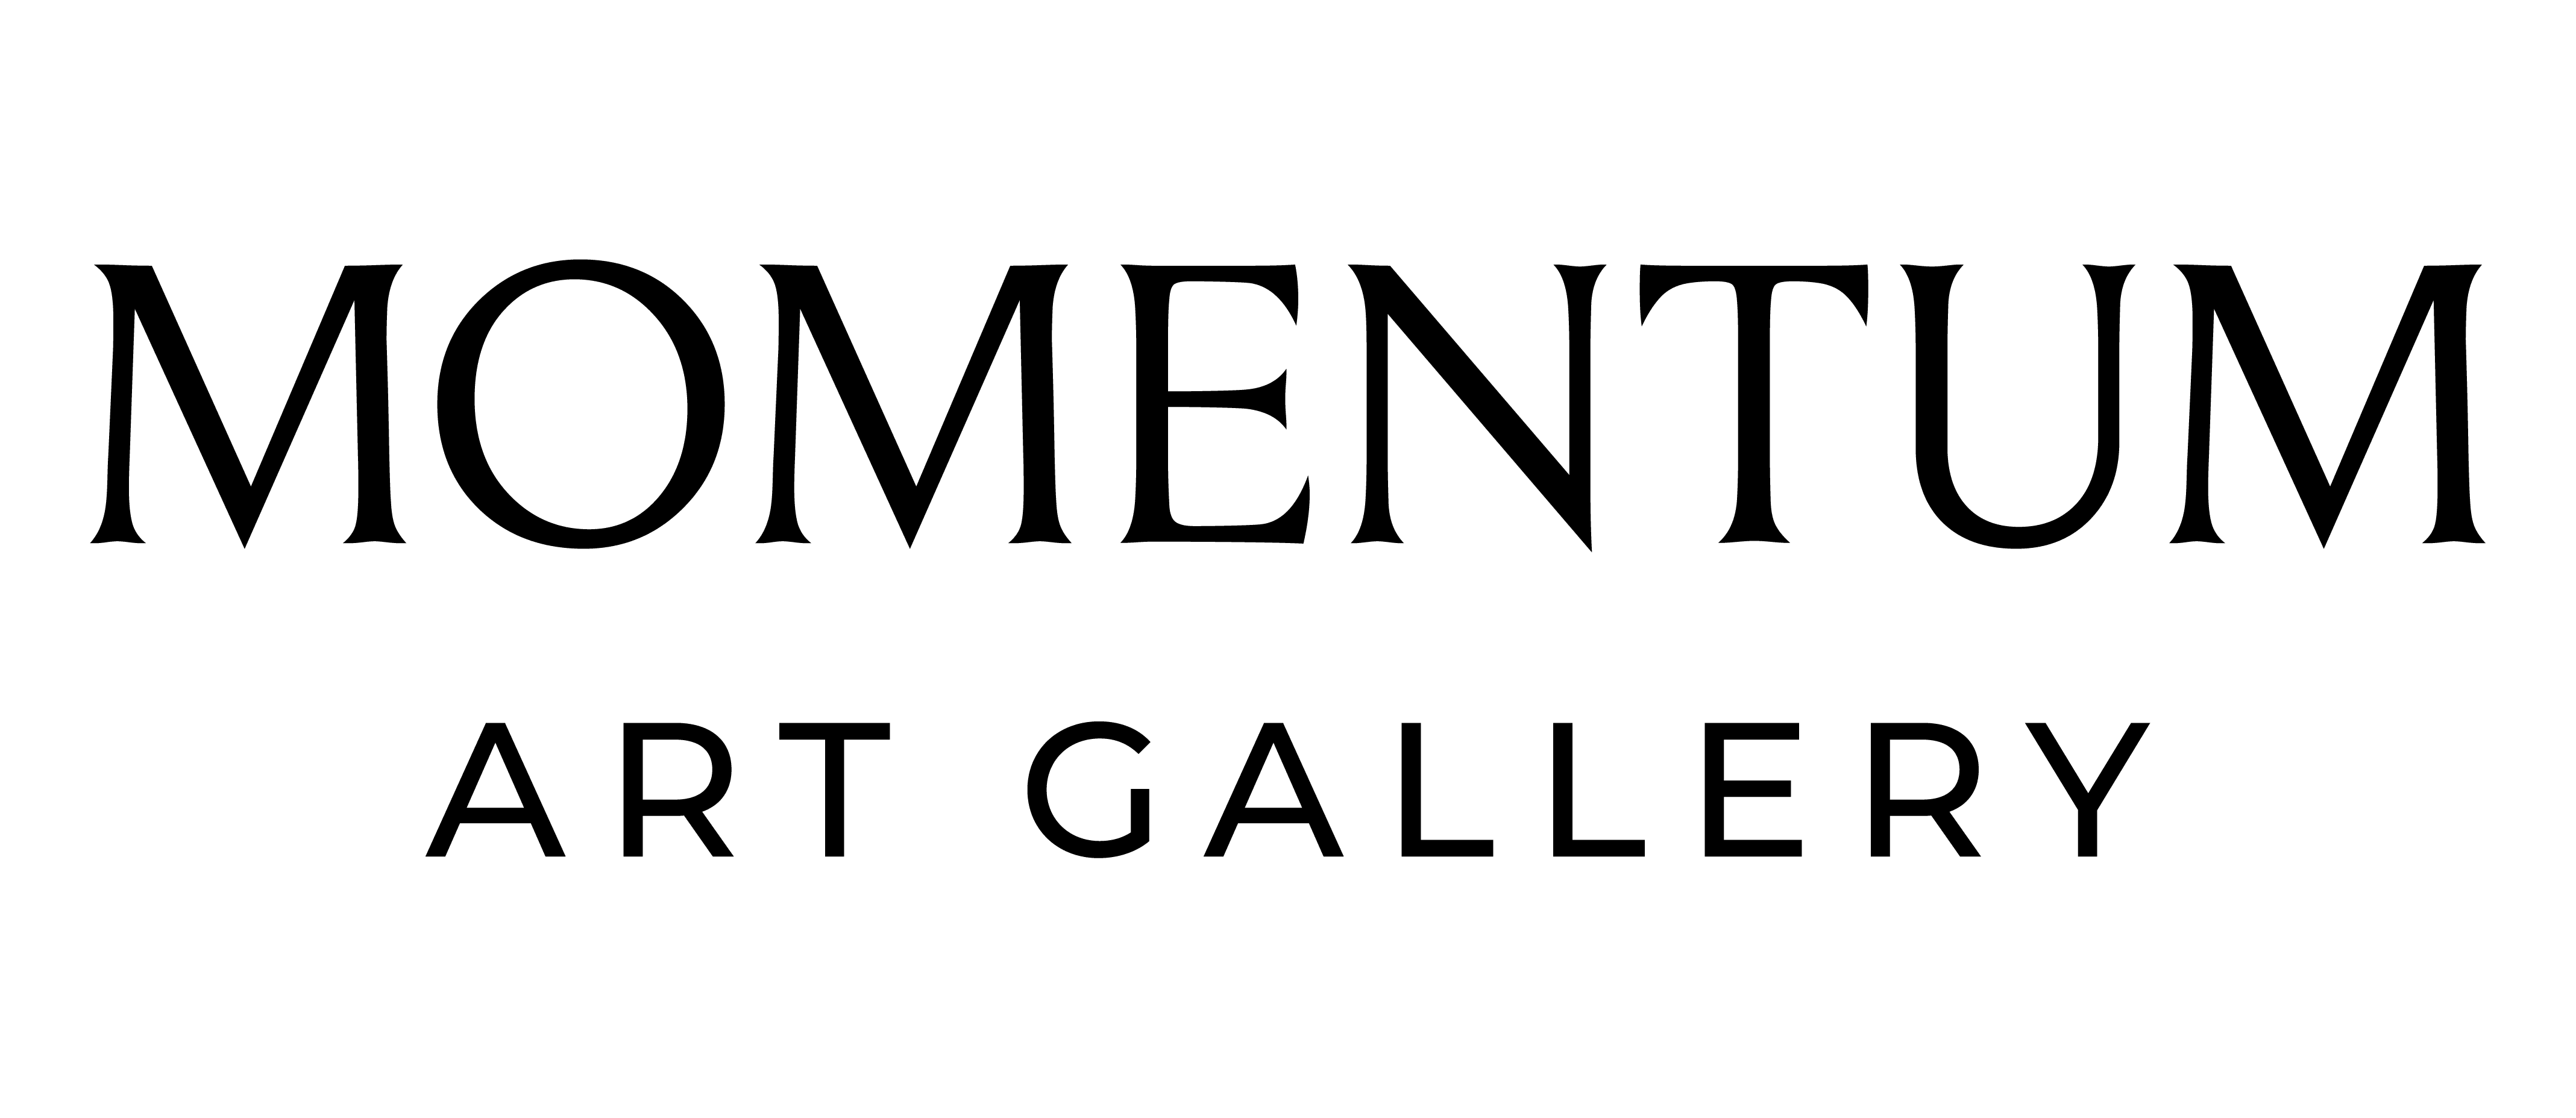 Momentum Art Gallery company logo